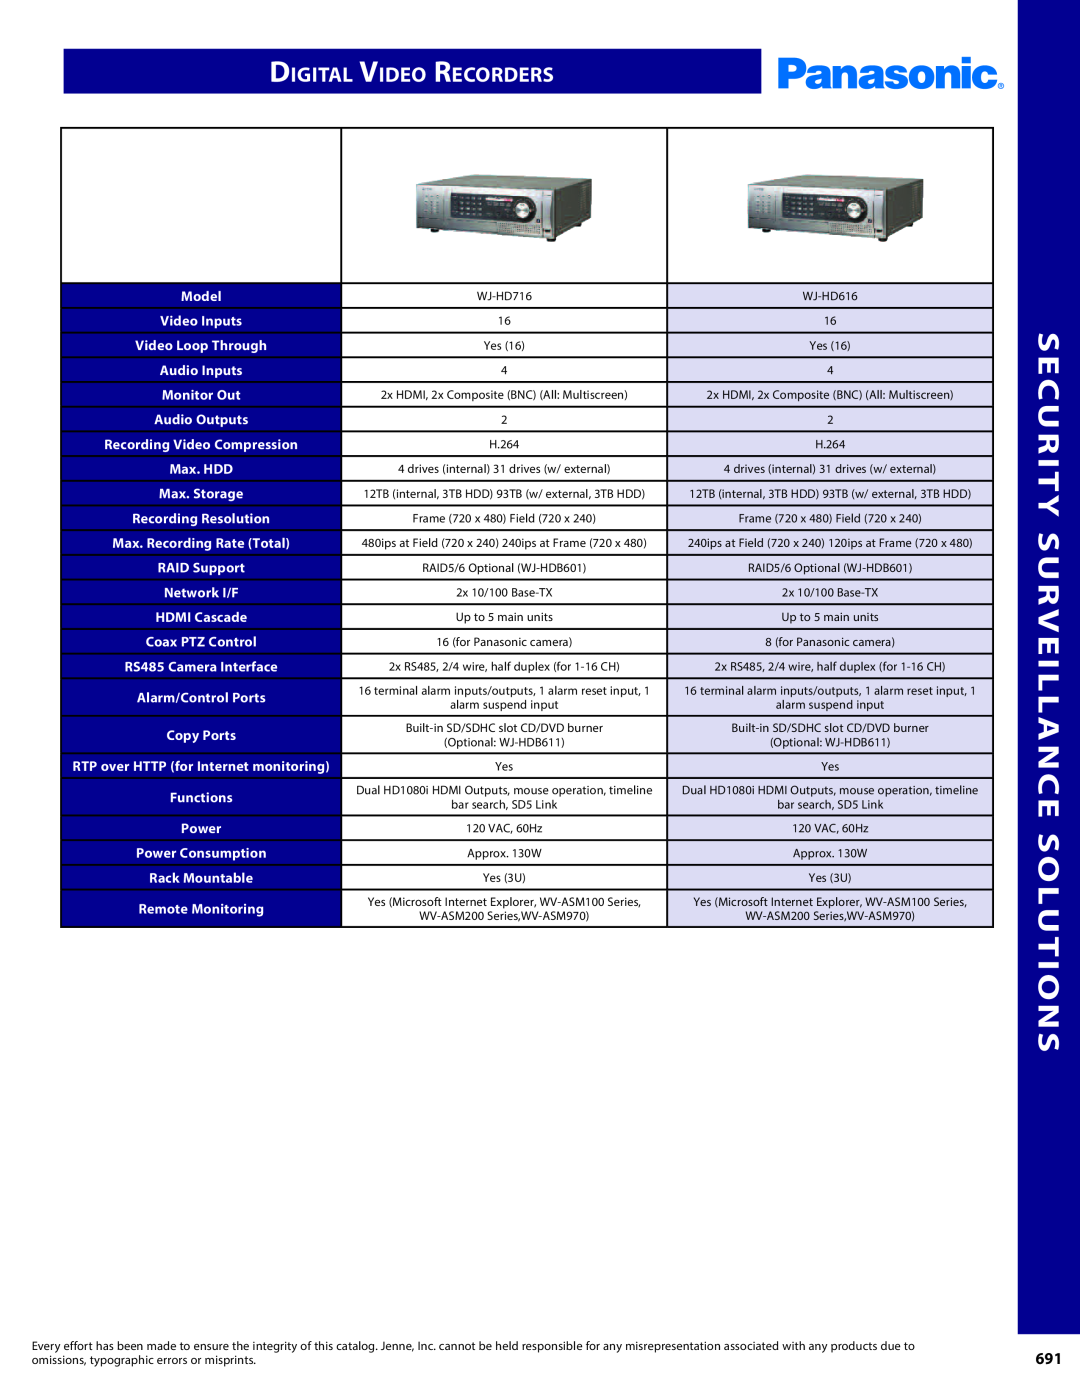 Panasonic PMPU2000 manual Security Surveillance Solutions, Digital Video Recorders 